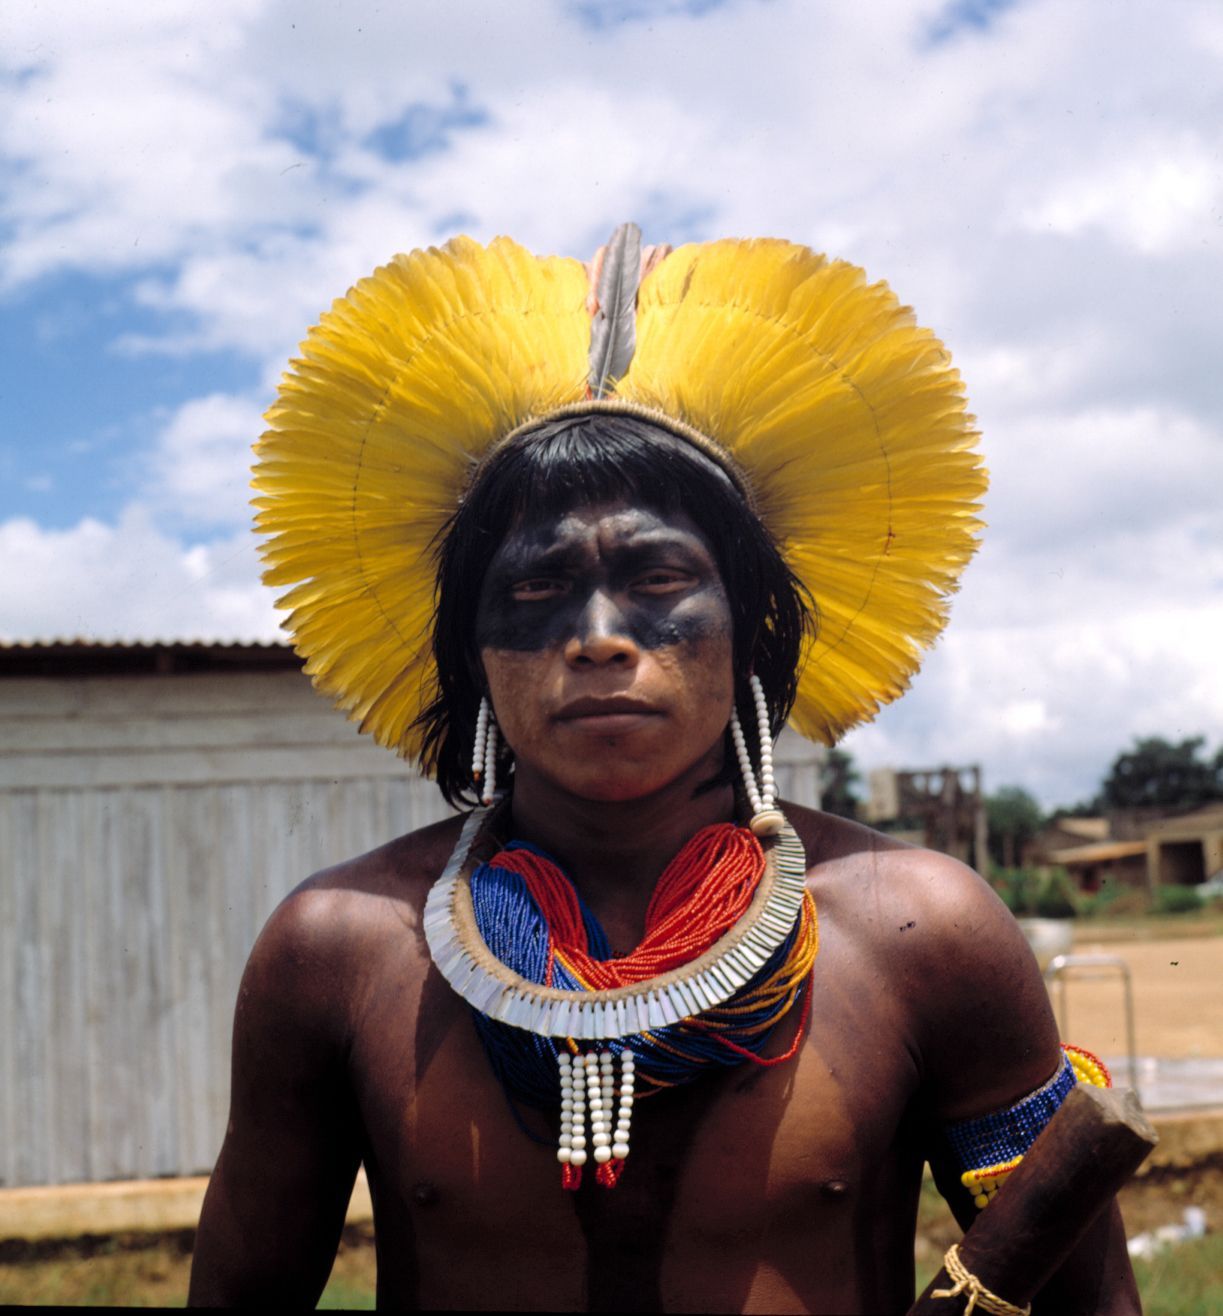 Amazonští indiáni